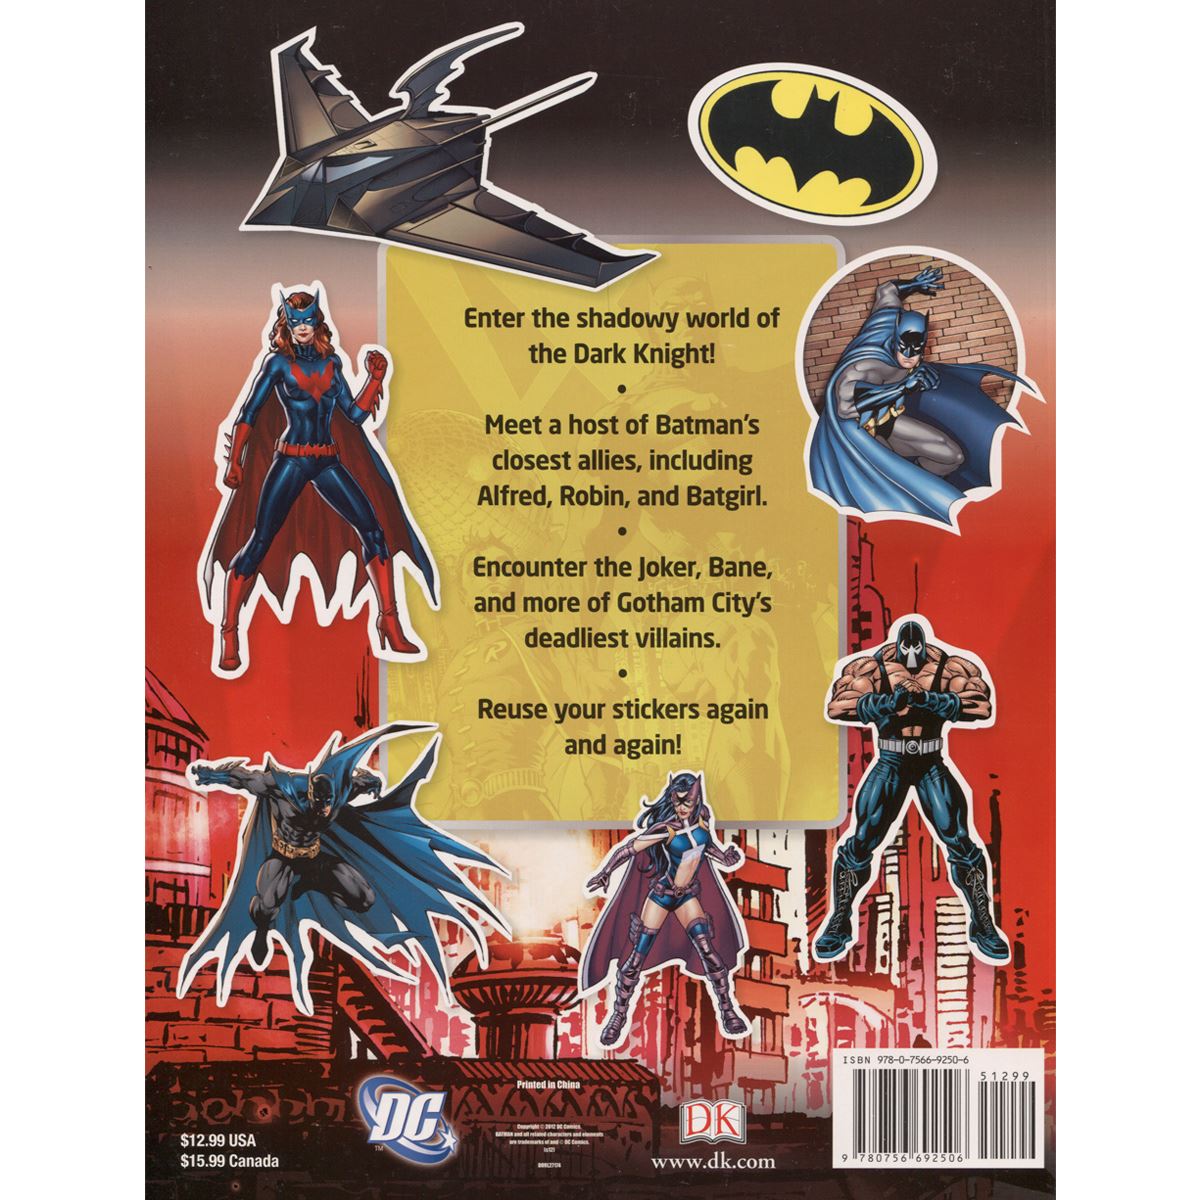 Ultimate Sticker Collection&#58; Batman